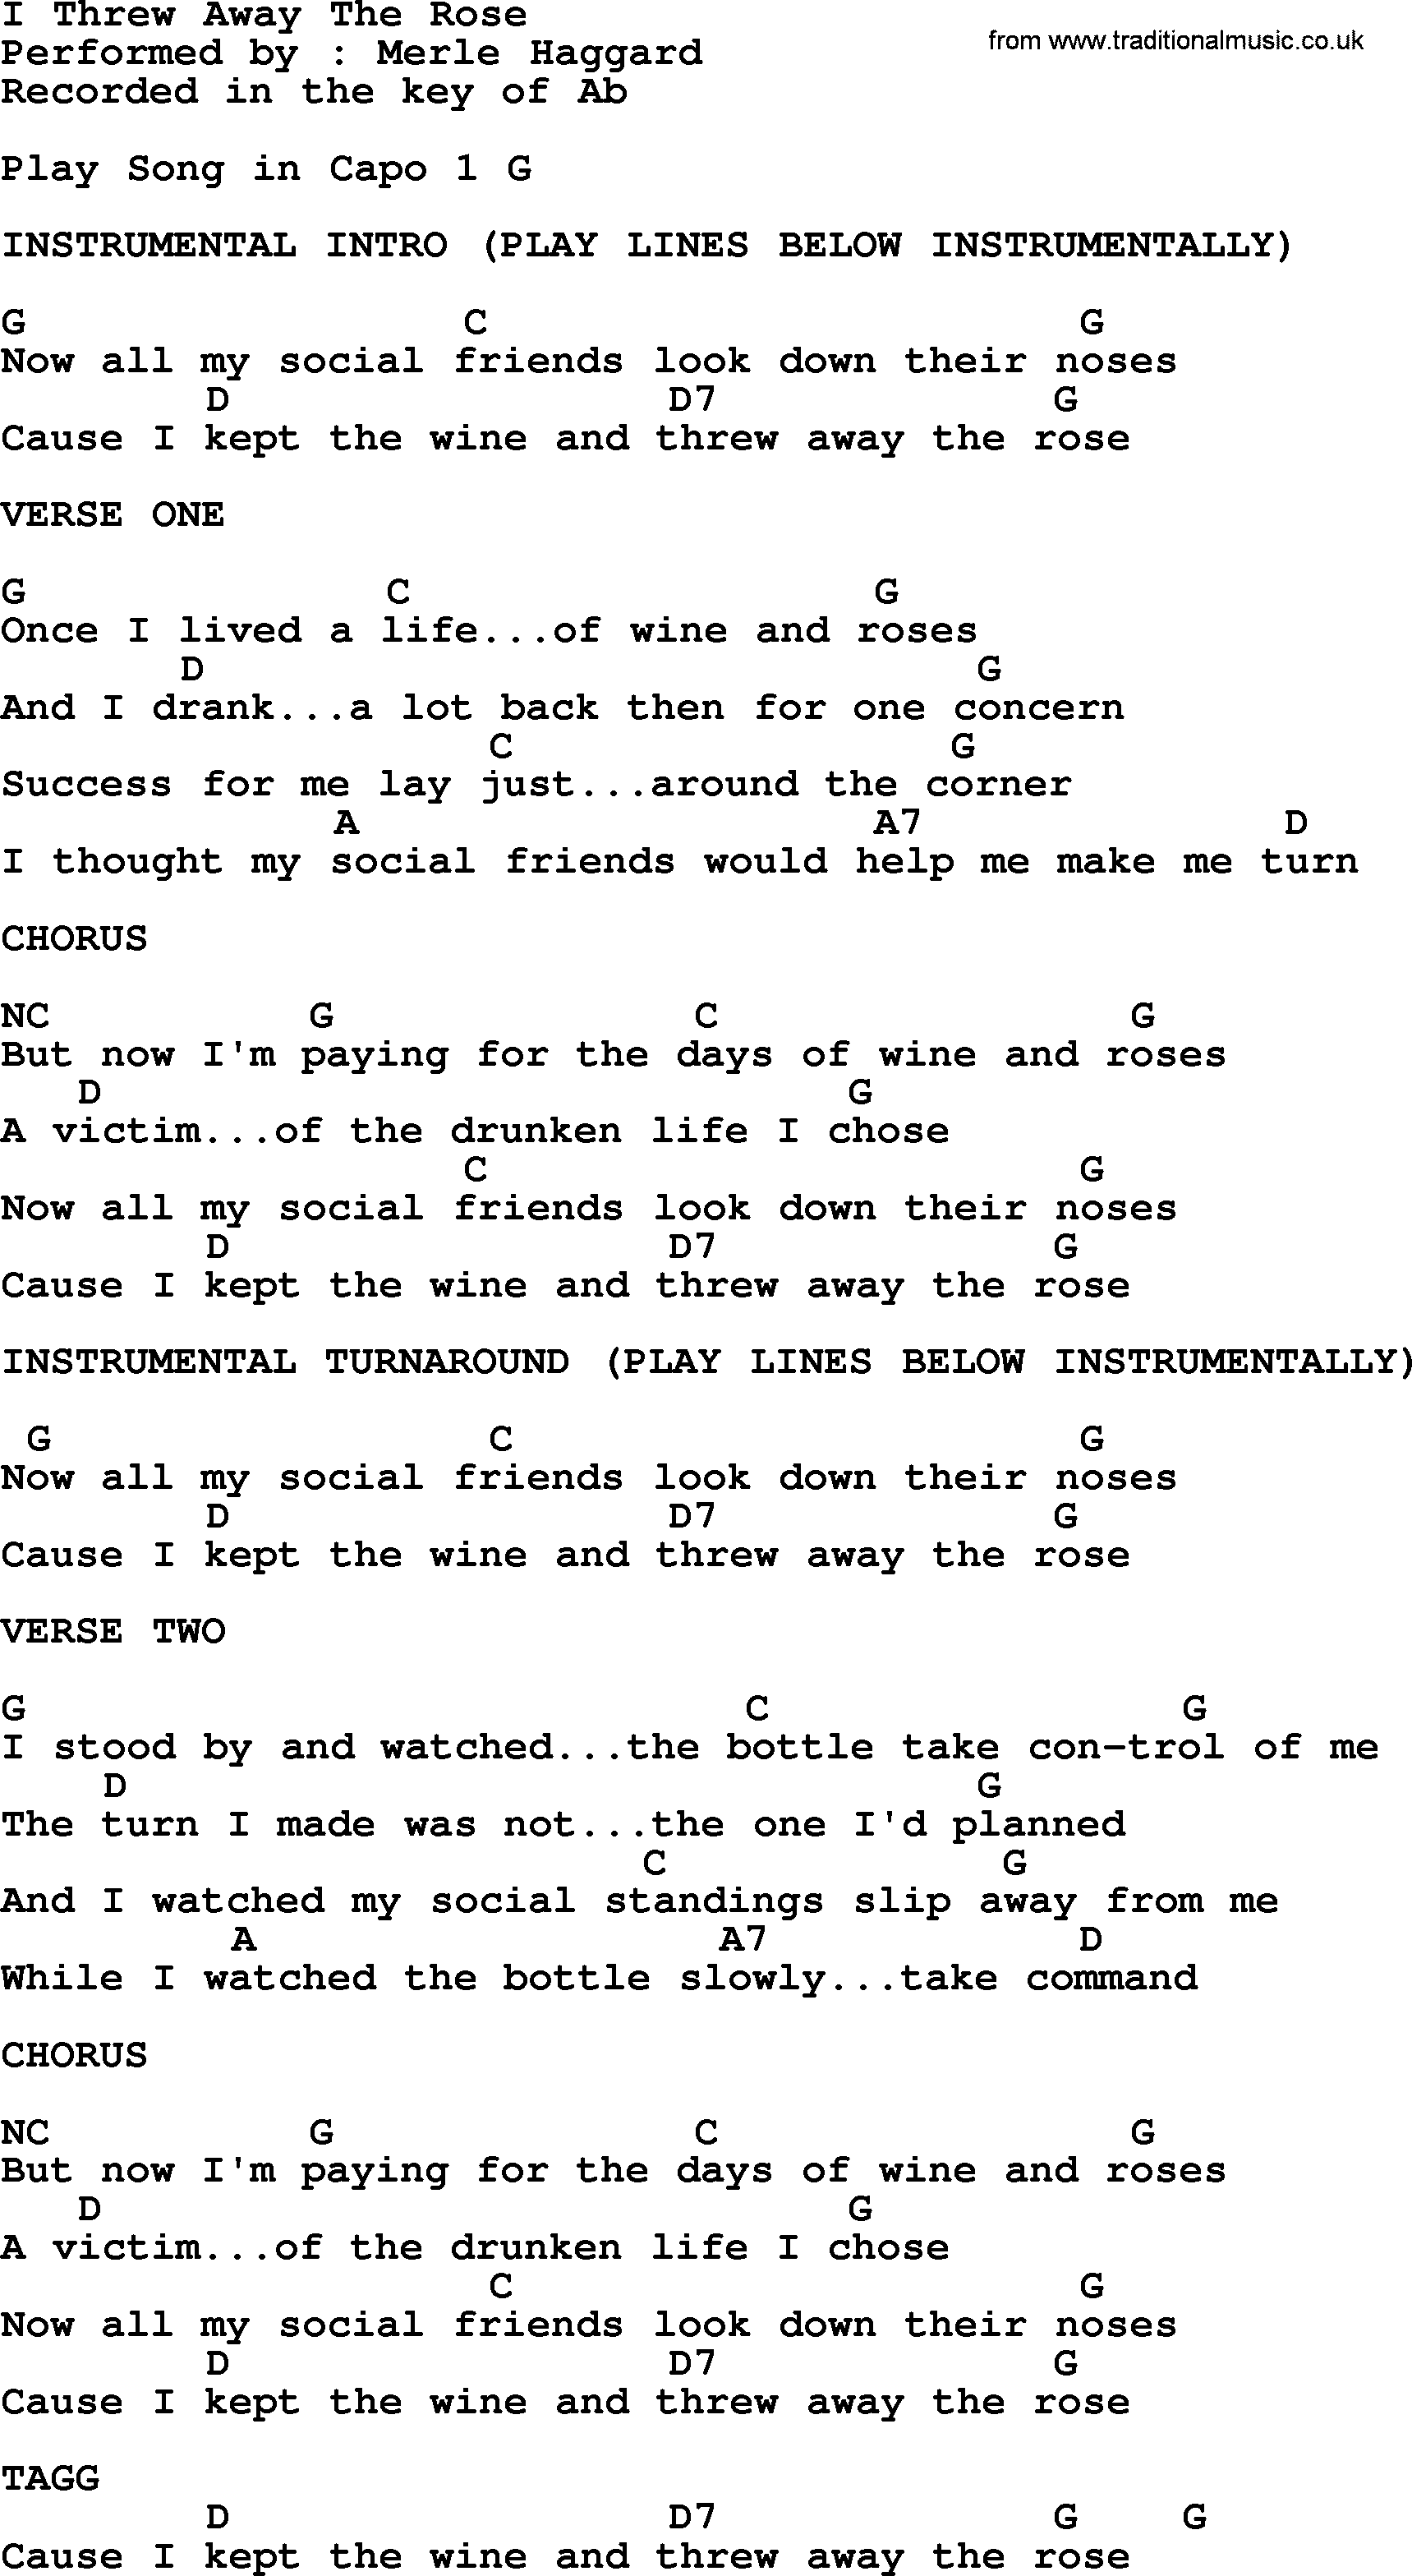 Merle Haggard song: I Threw Away The Rose, lyrics and chords